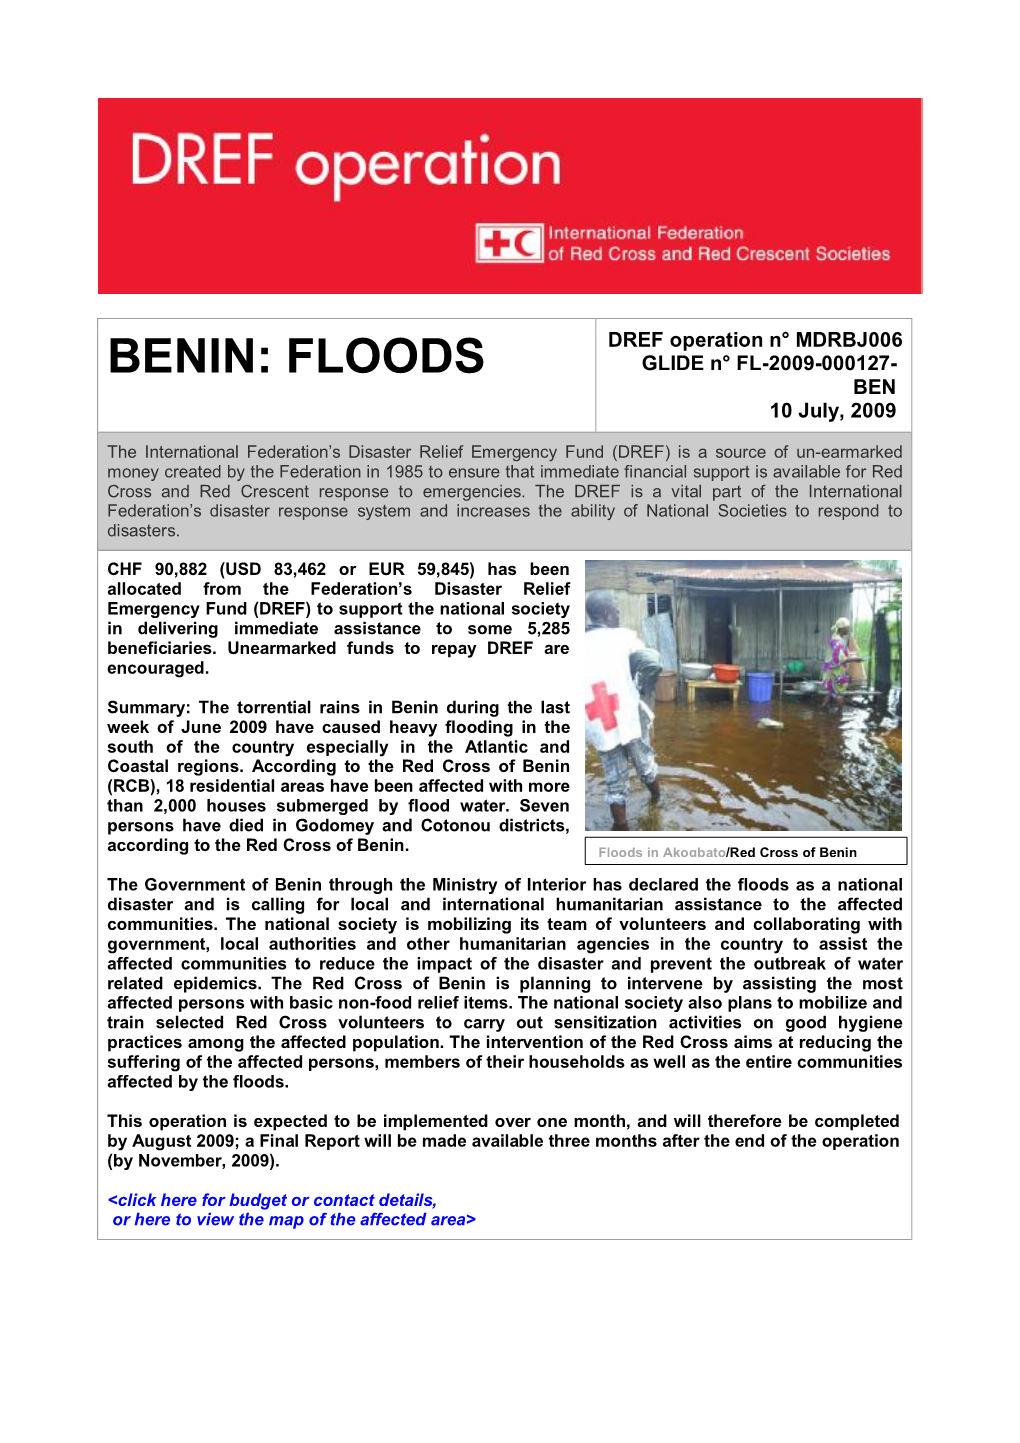 BENIN: FLOODS GLIDE N° FL-2009-000127- BEN 10 July, 2009